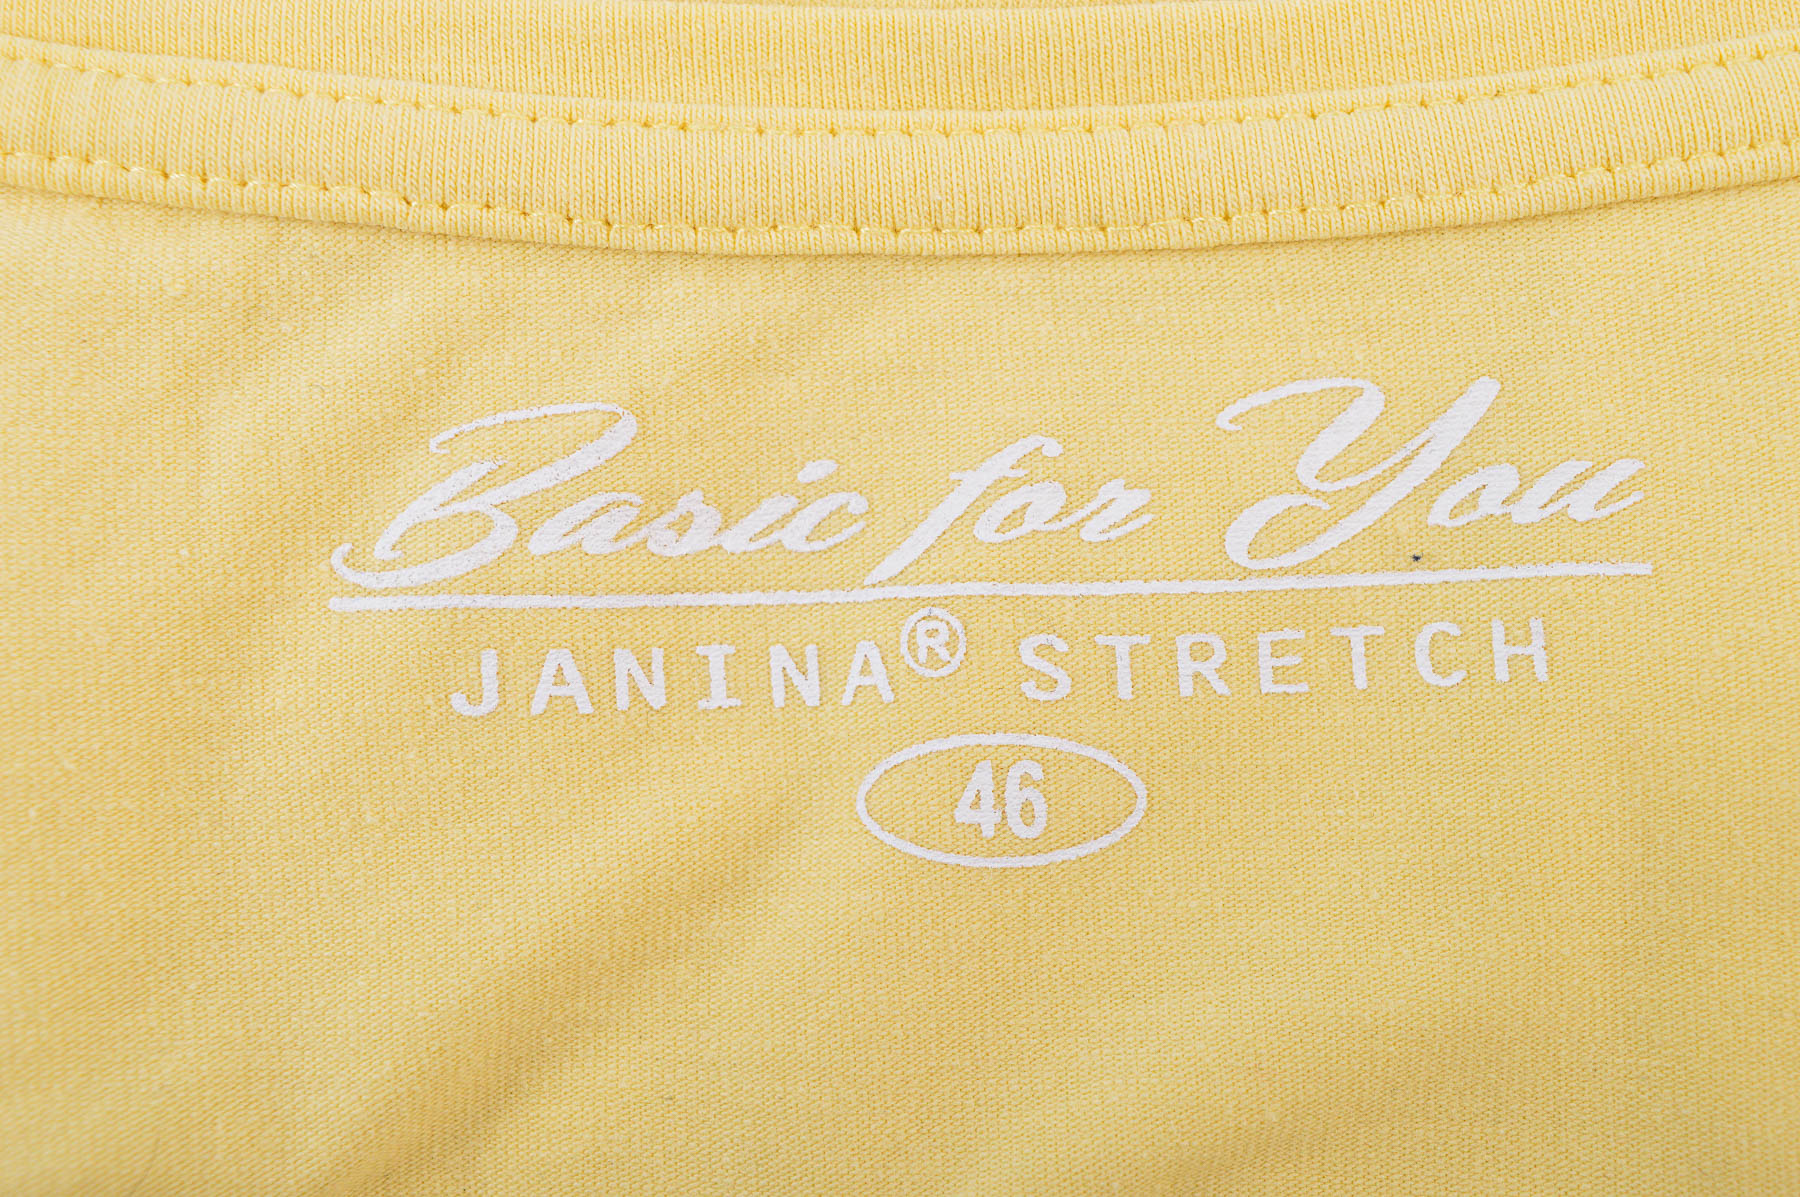 Women's blouse - Janina - 2